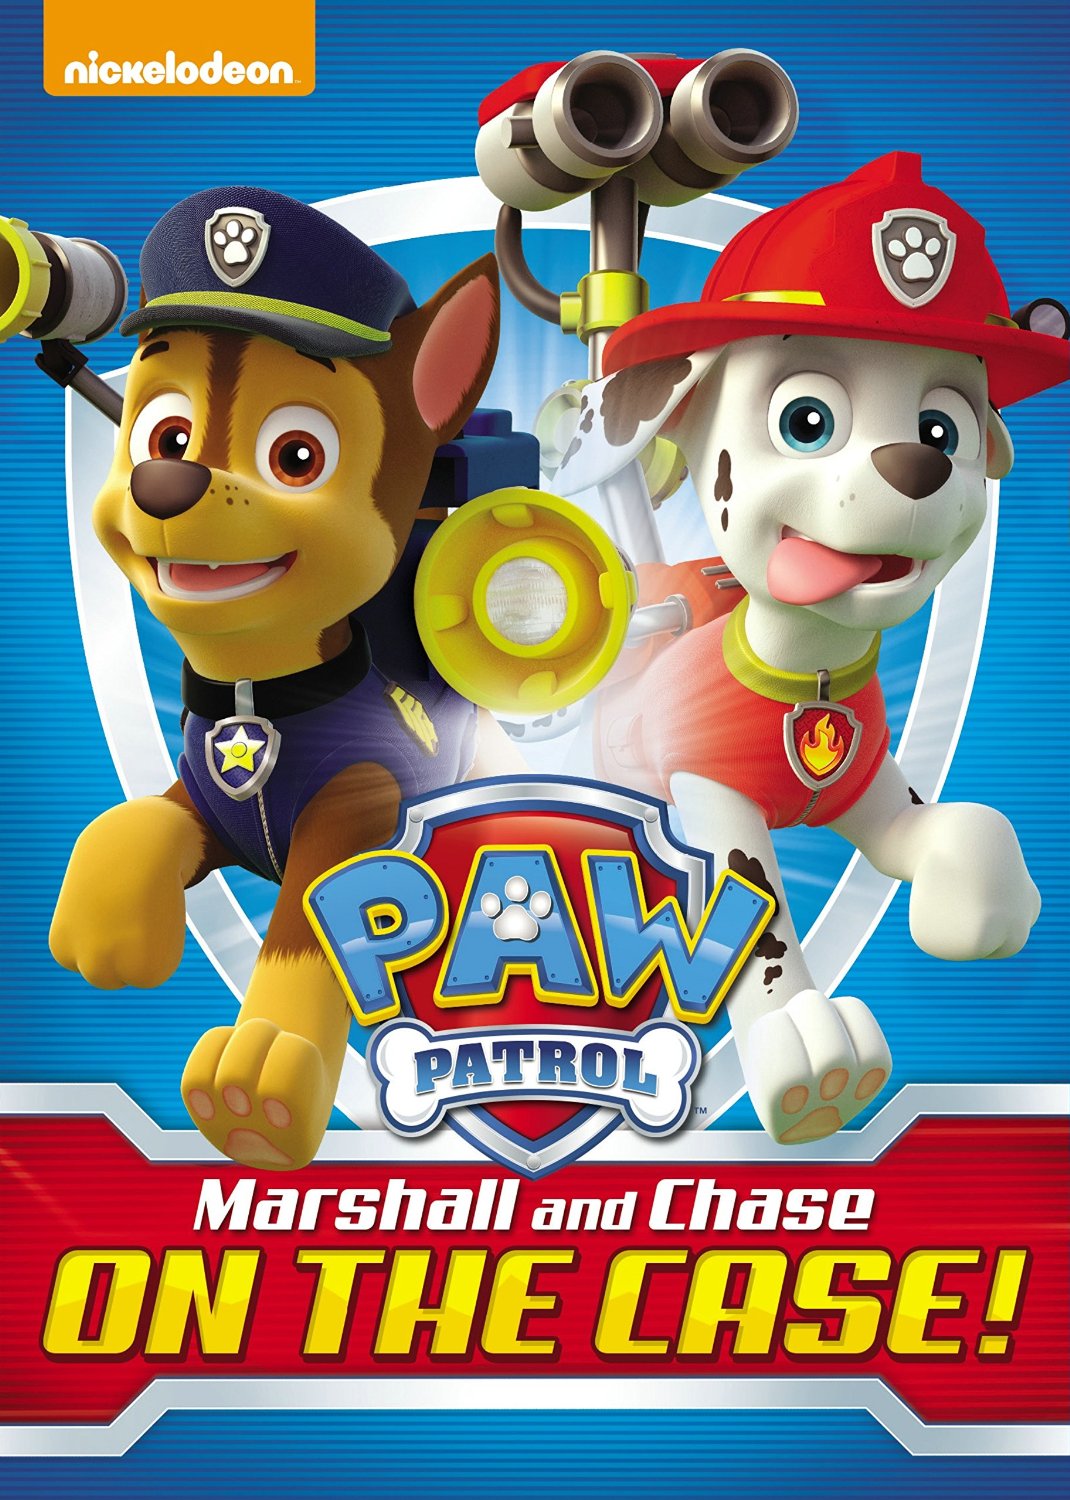 nickelodeon paw patrol marshall